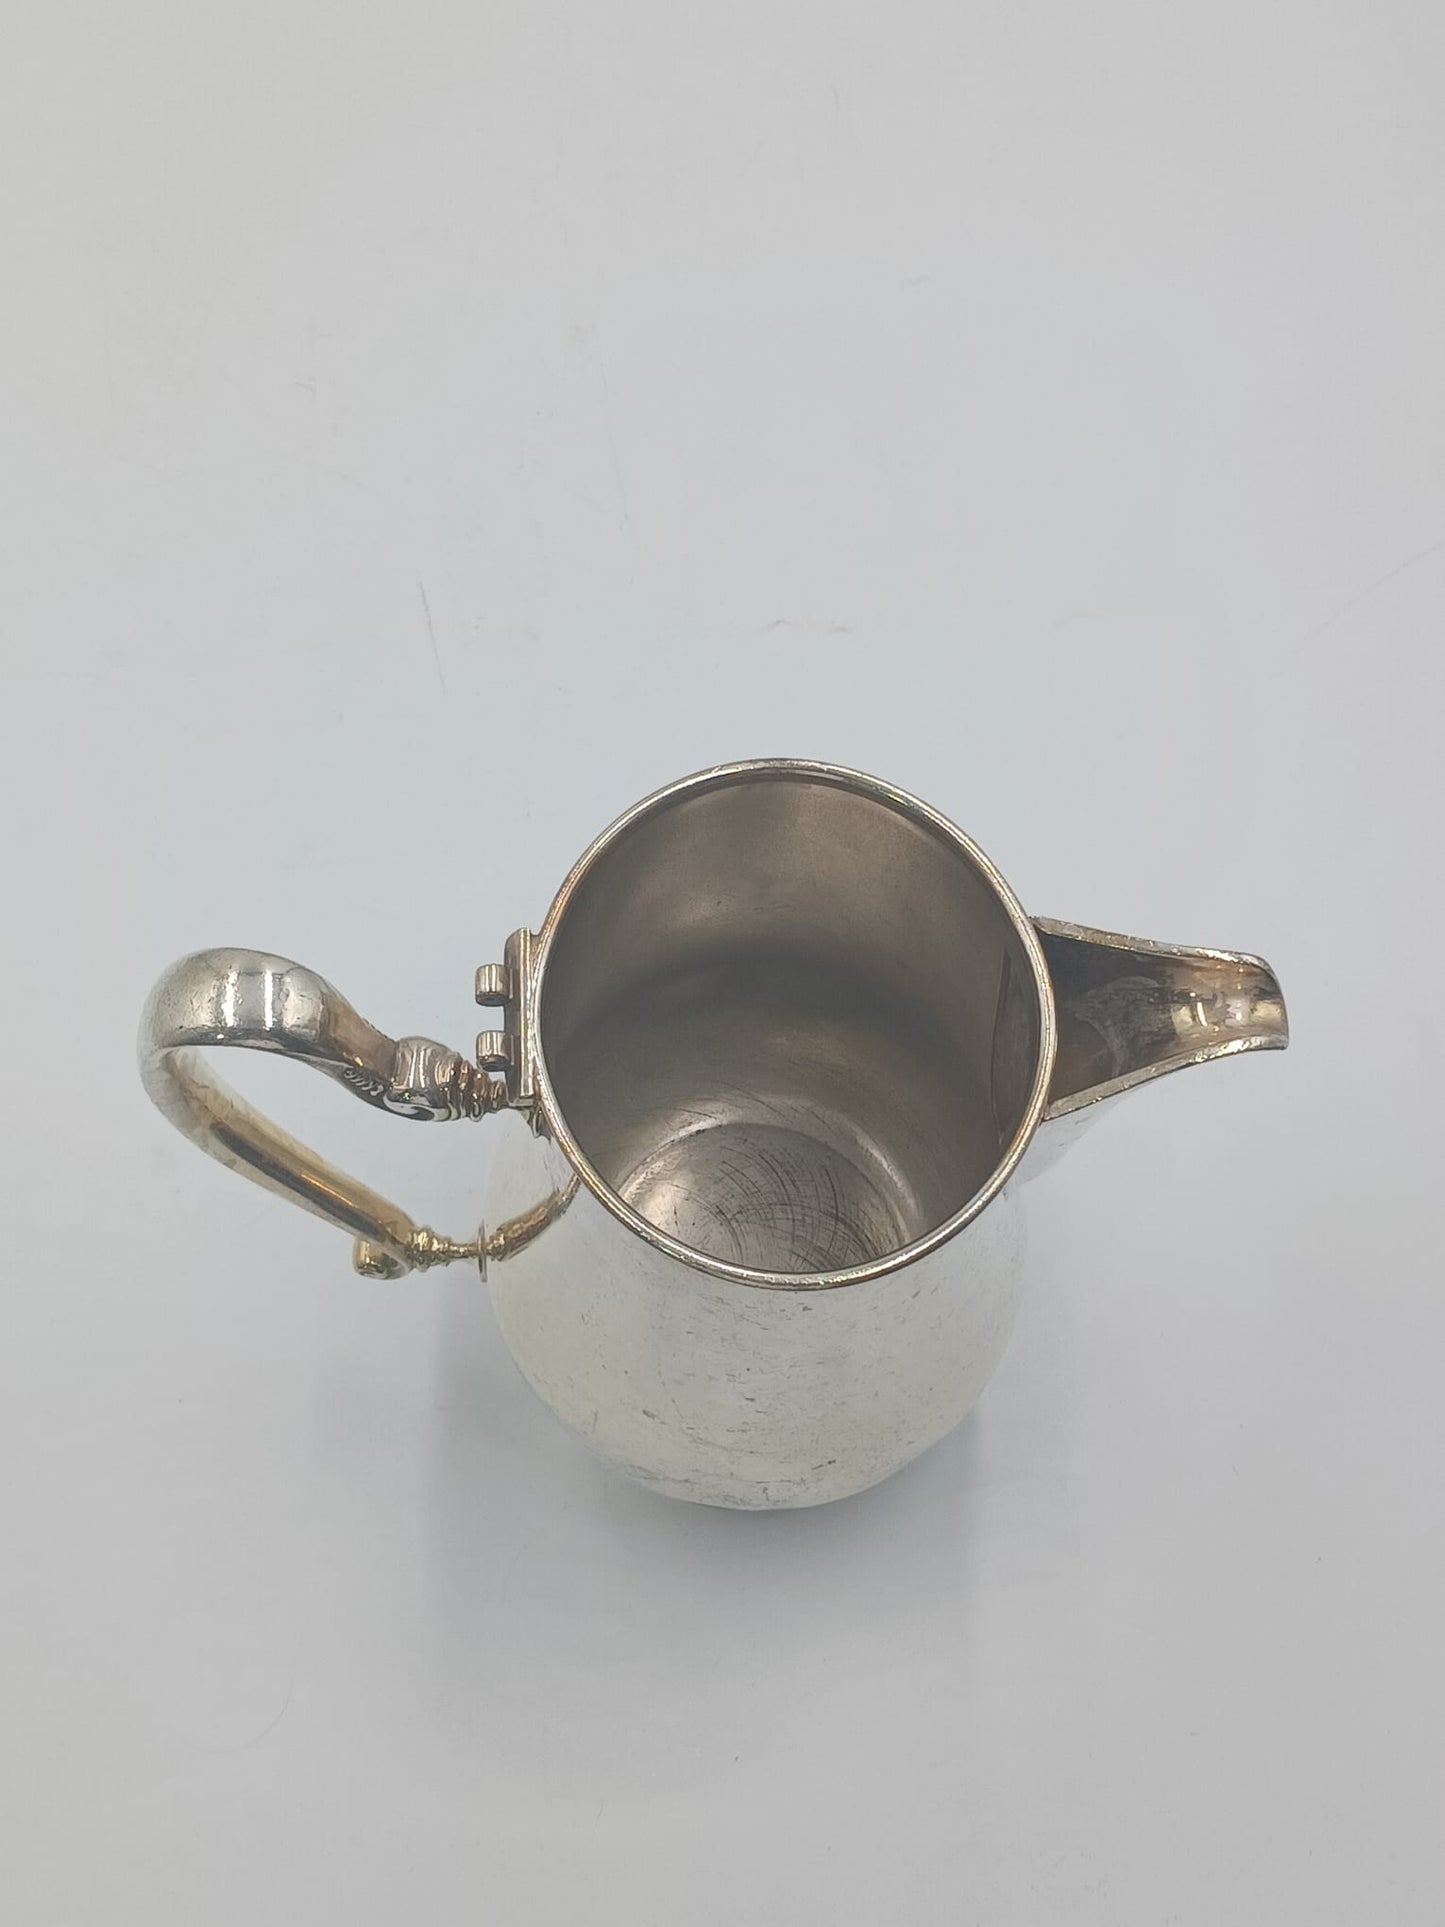 10" Vintage Metal coffee pots International Silver Co. - No Lid